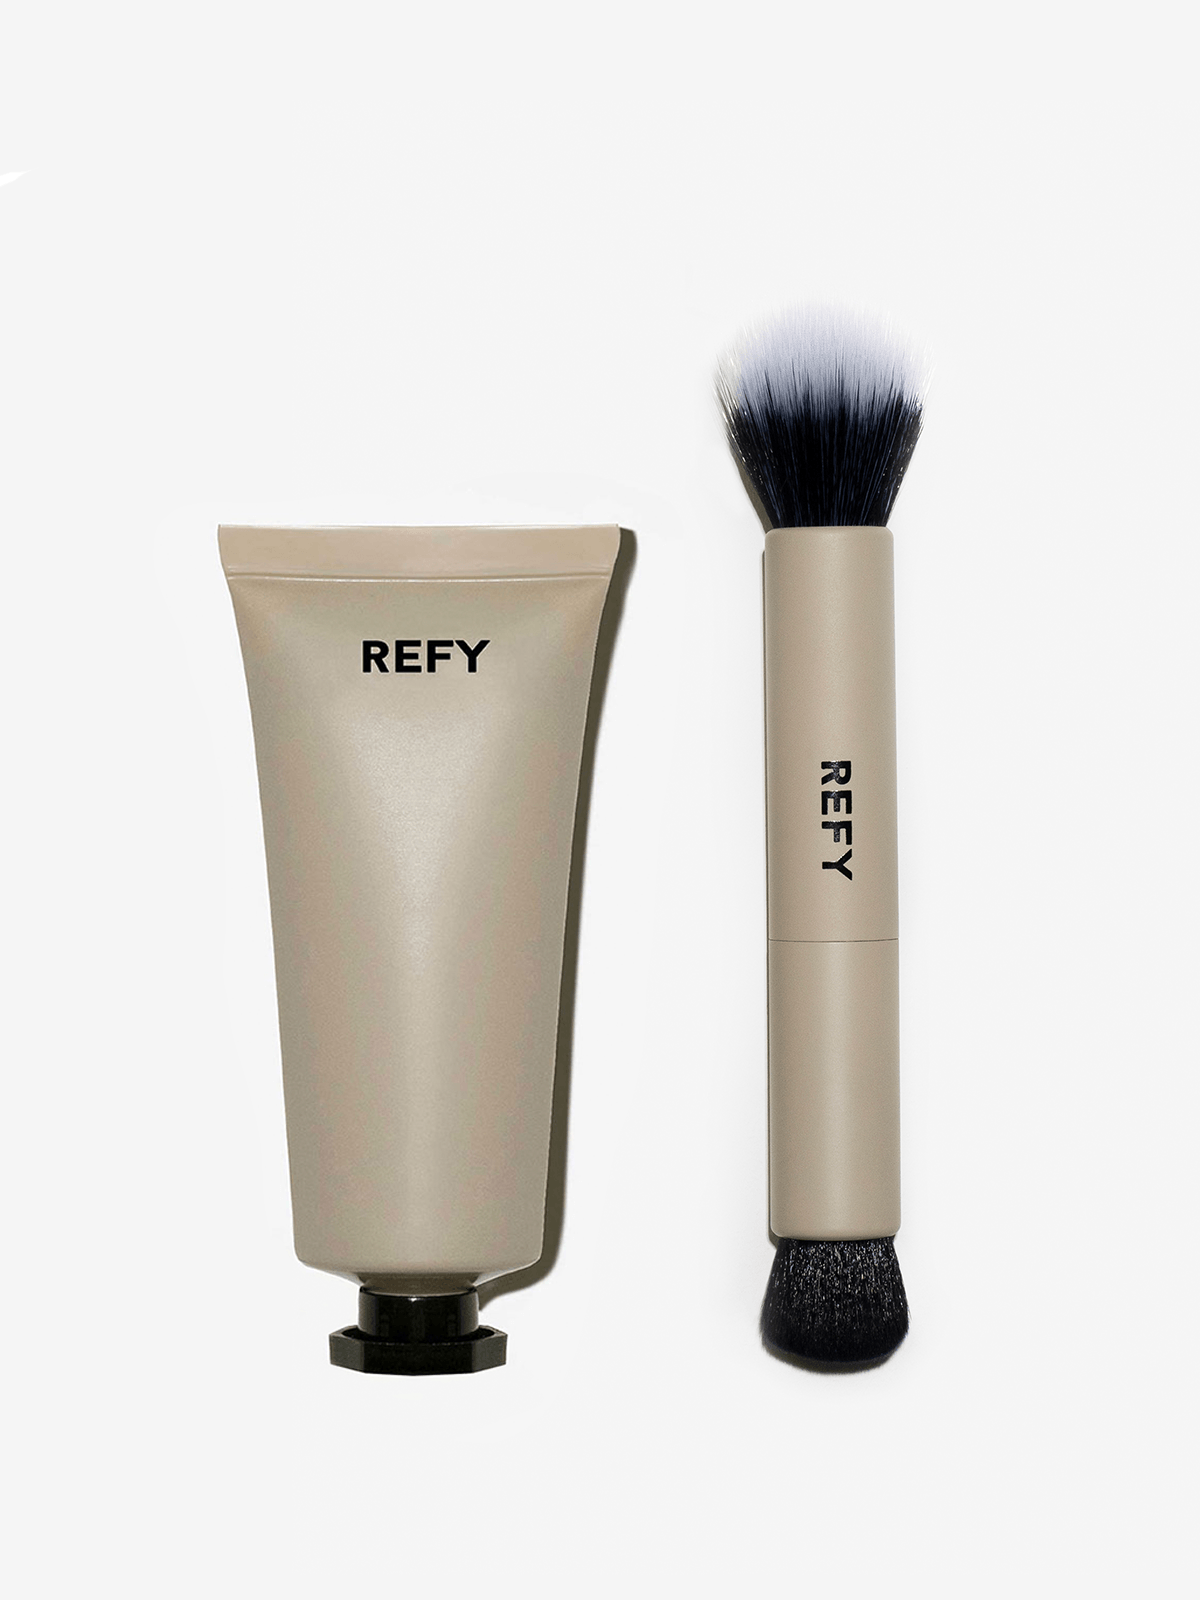 REFY Duo Face Brush